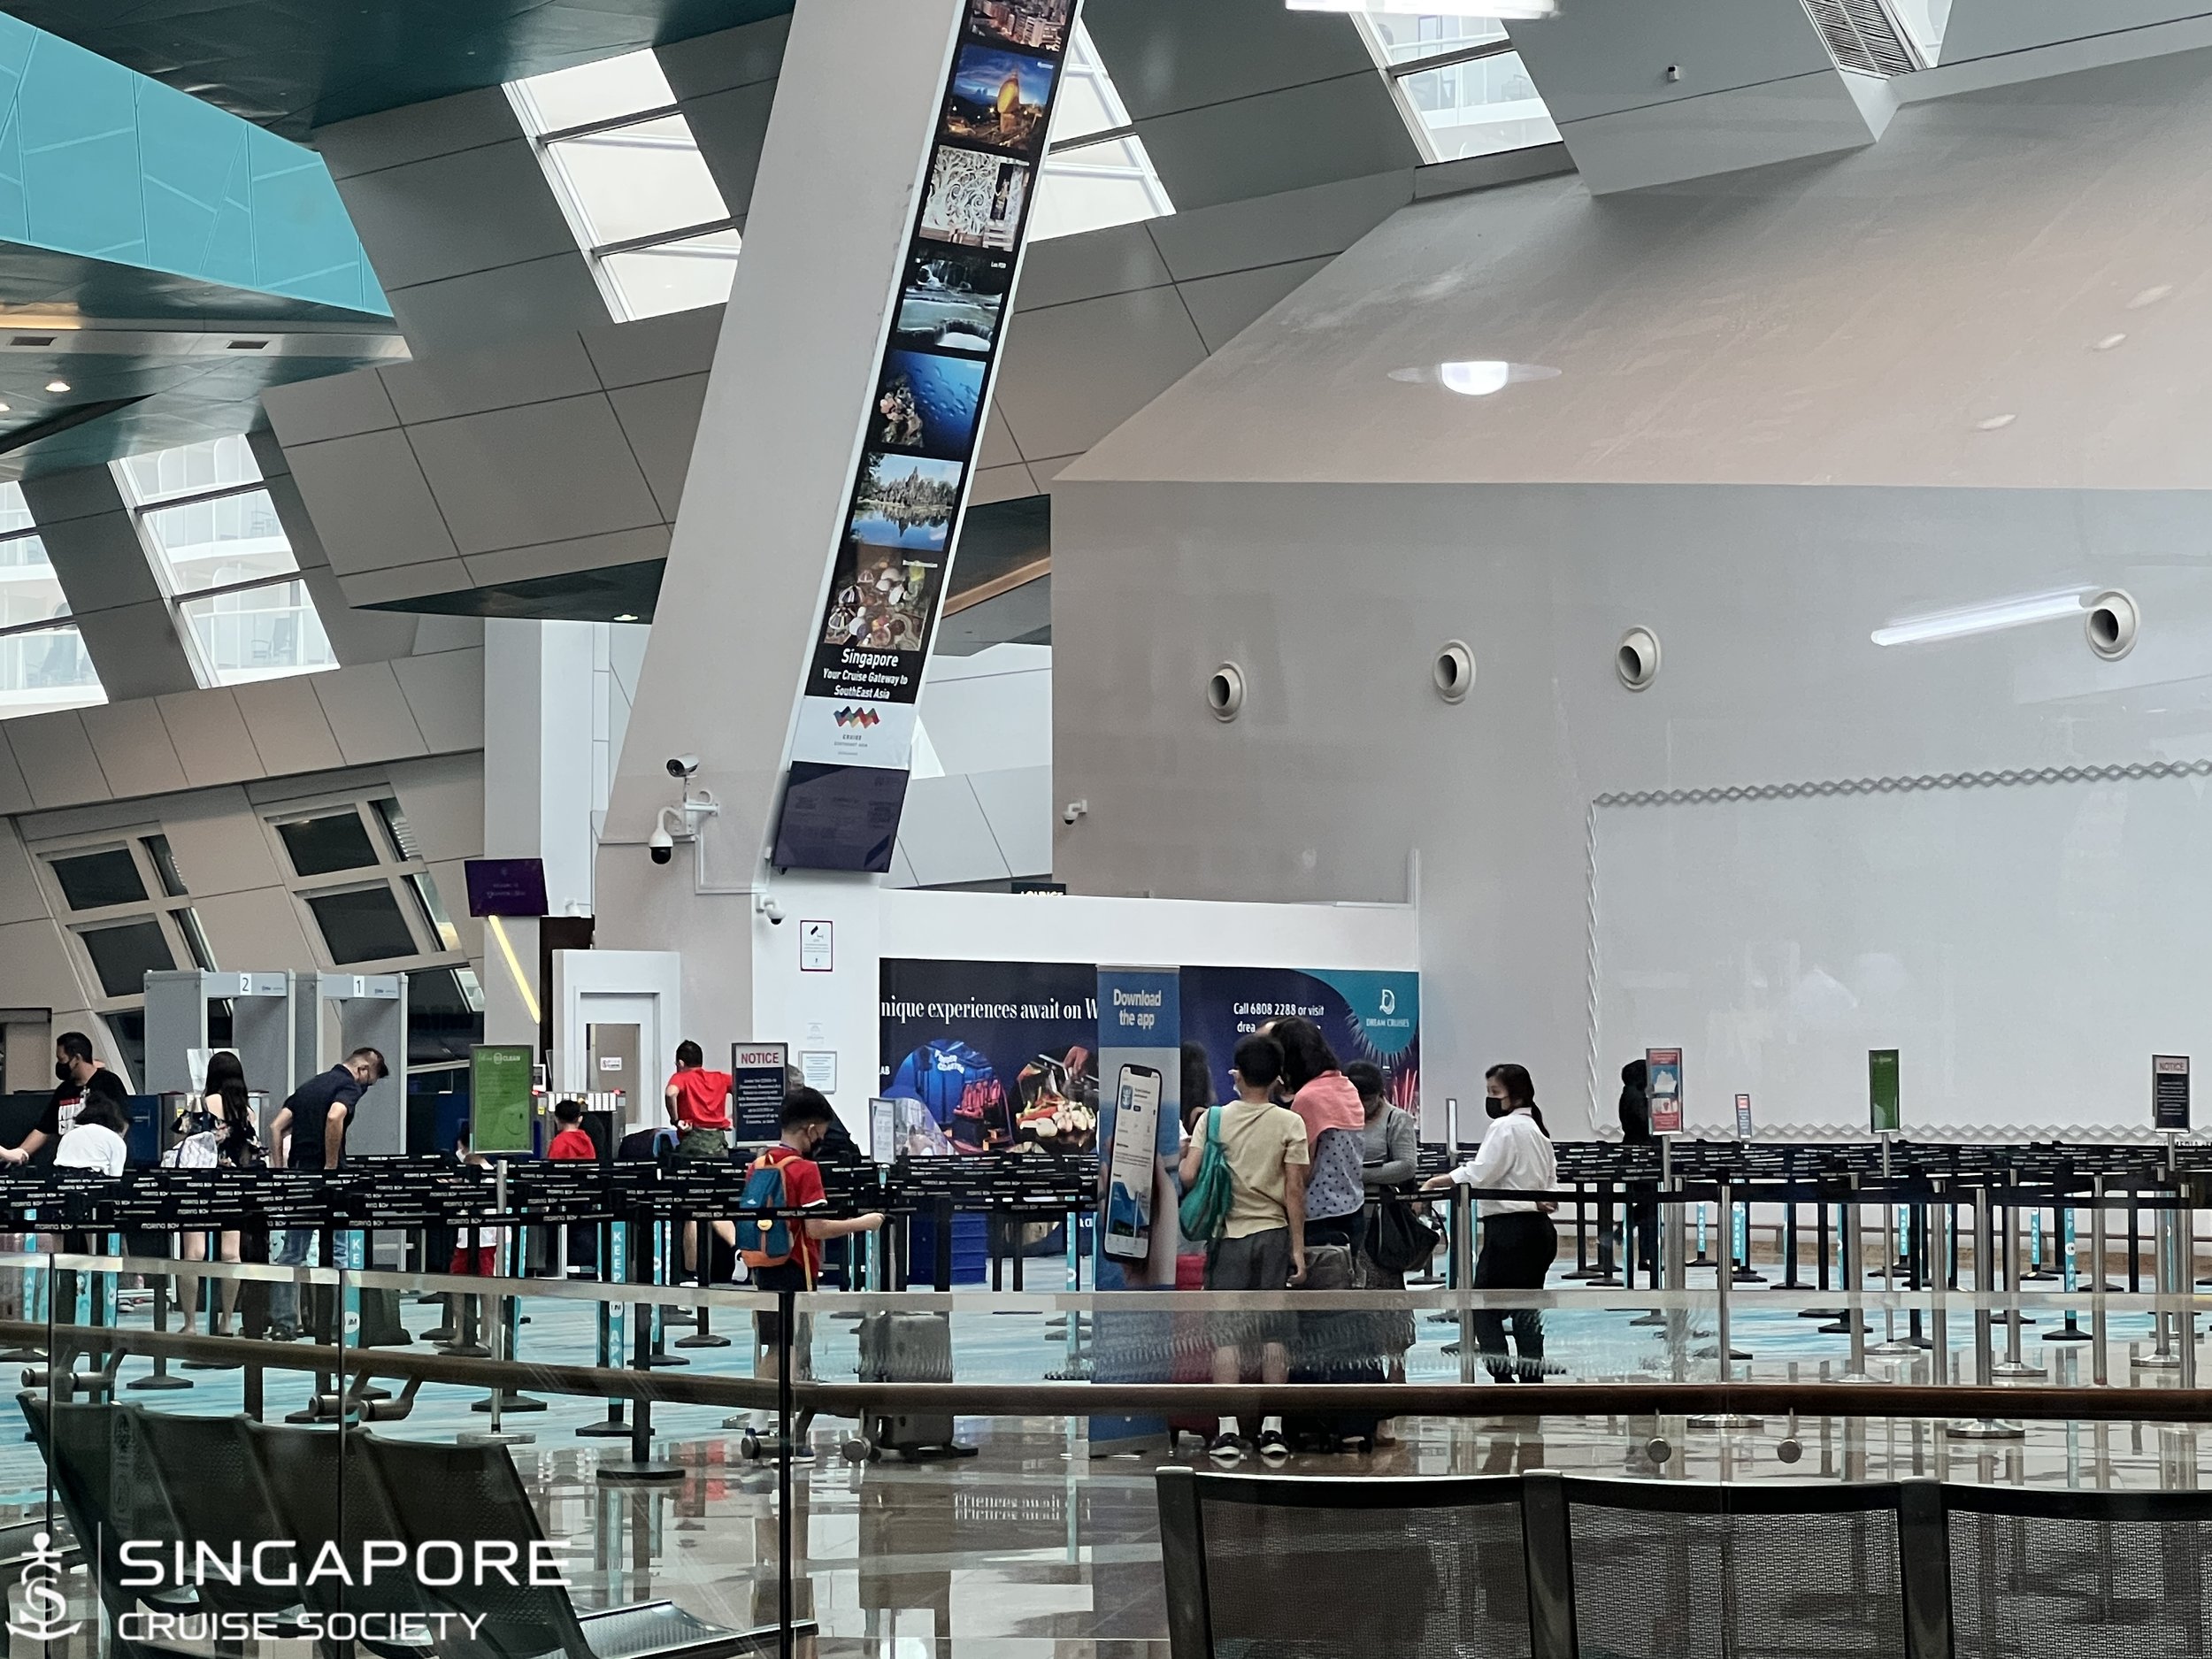 No queues at the terminal. PHOTO: SINGAPORE CRUISE SOCIETY